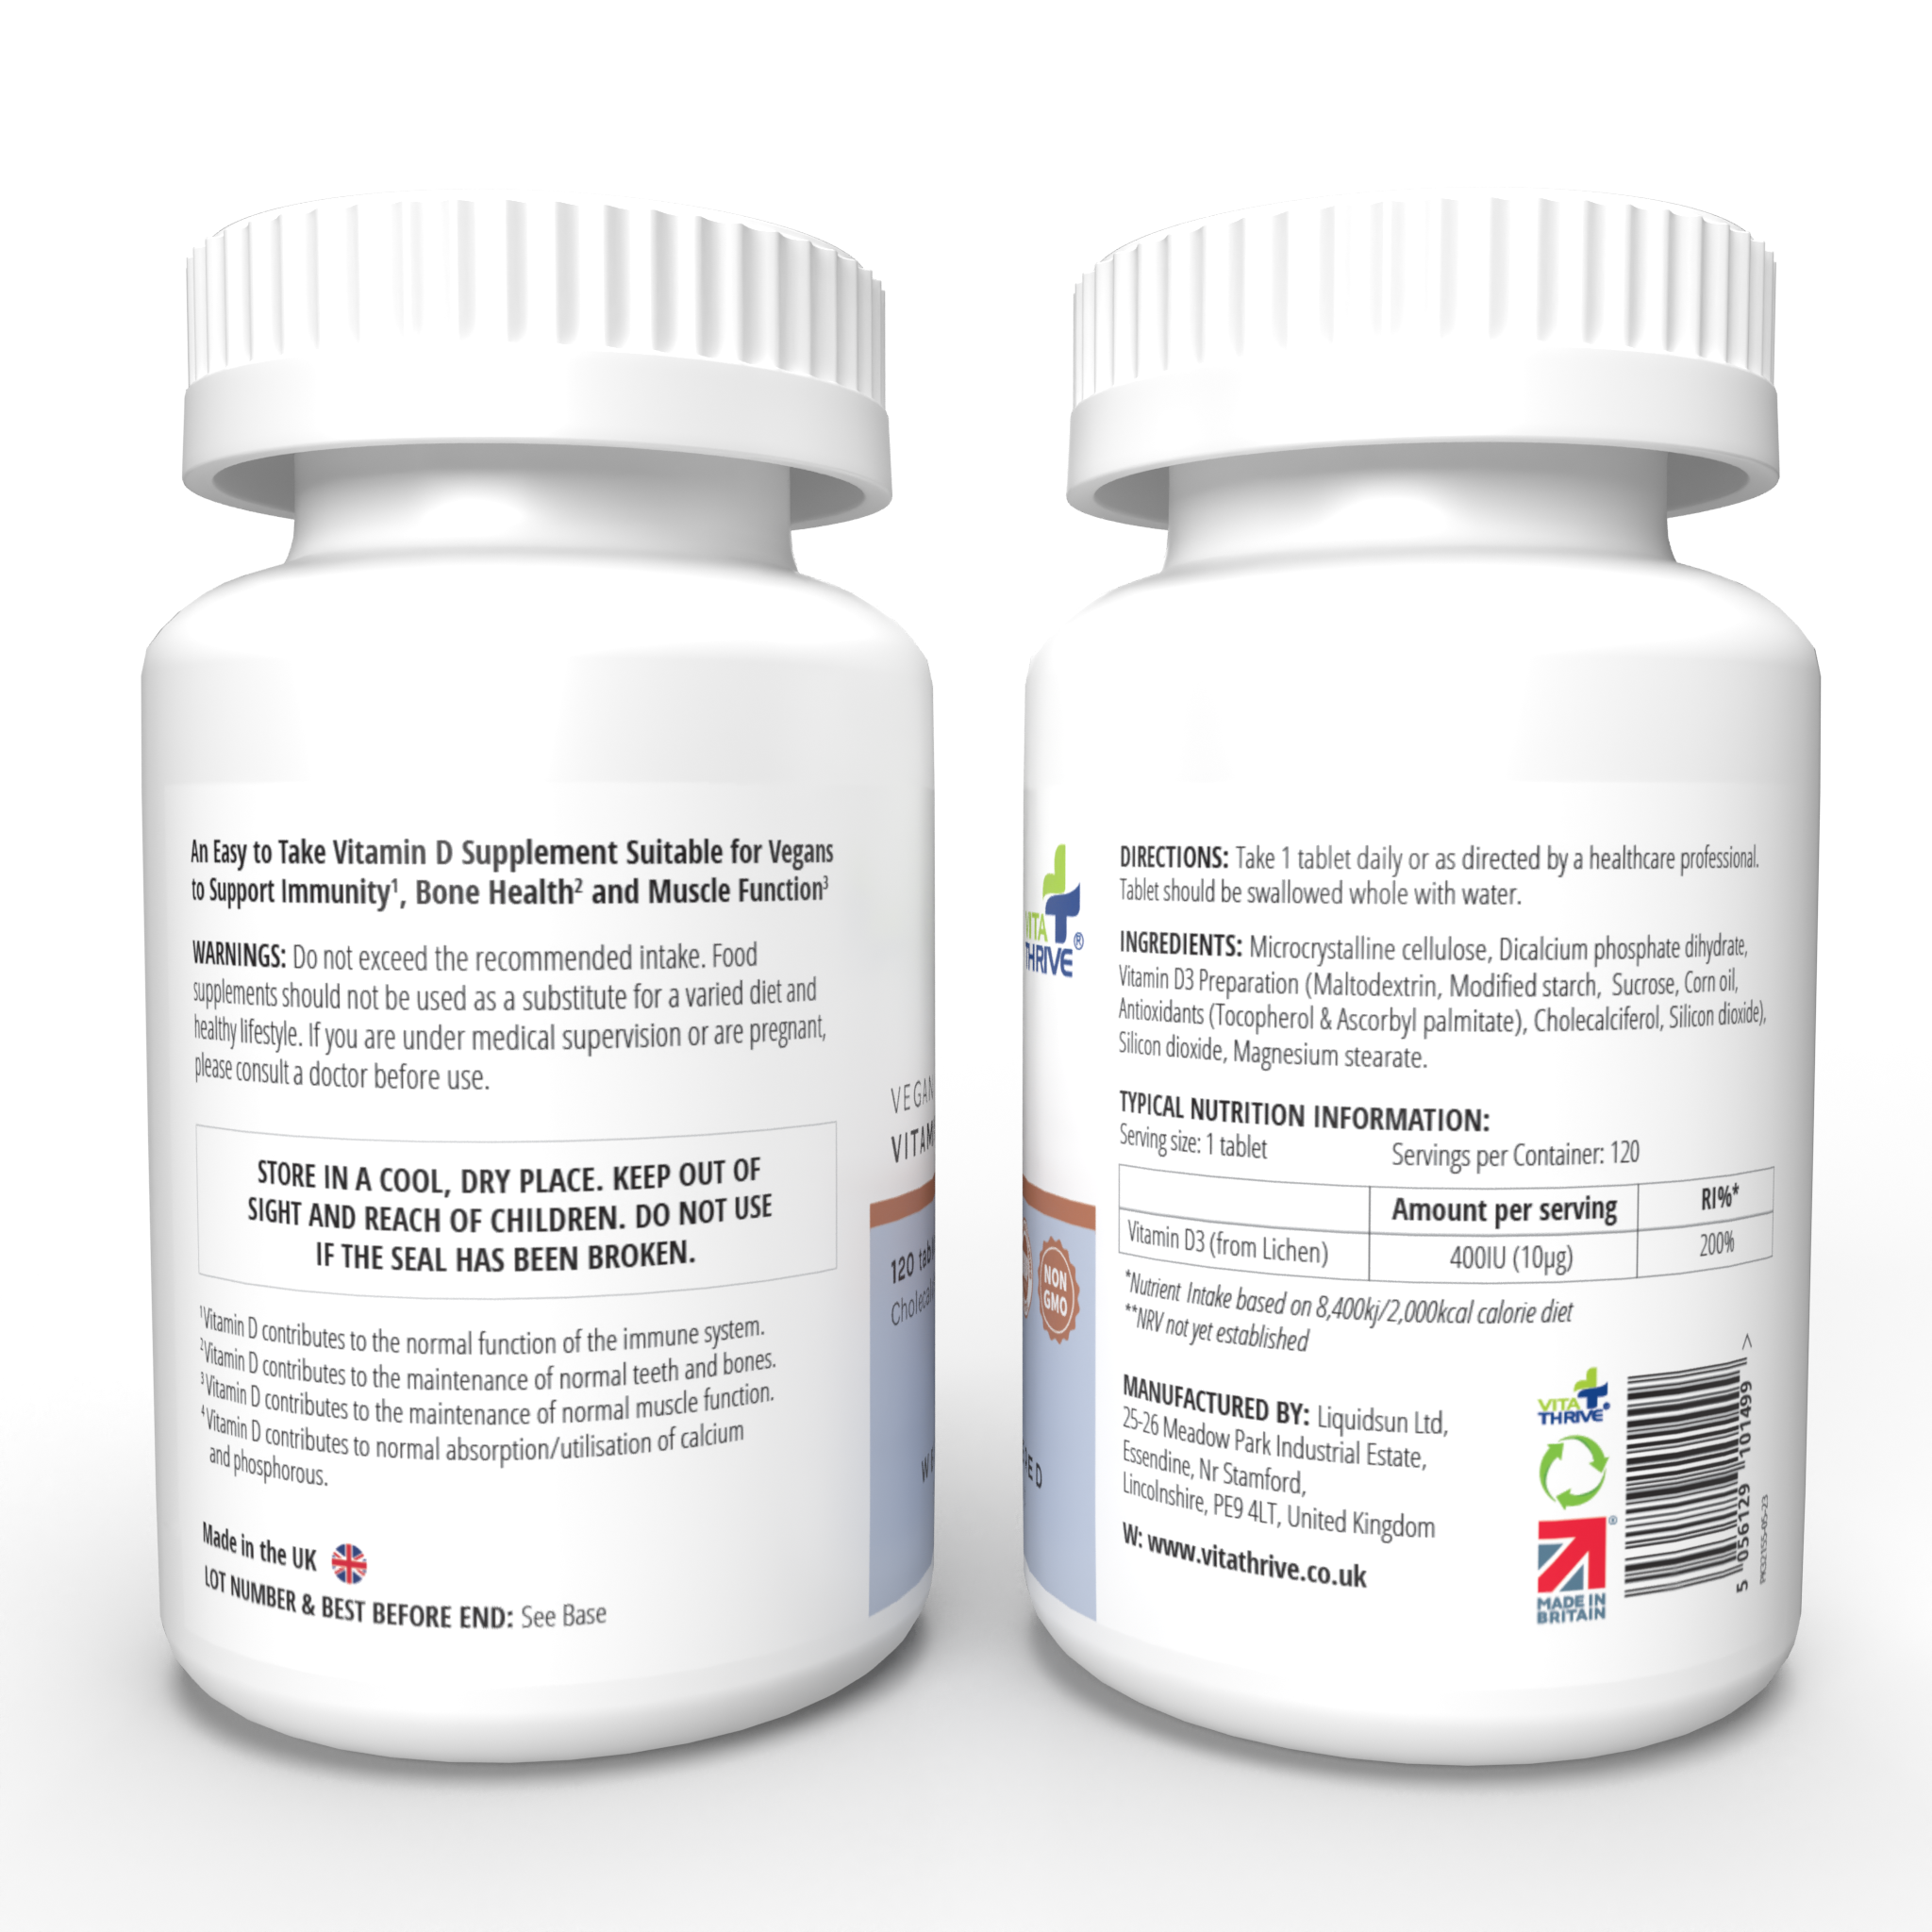 VitaThrive® Vegan Vitamin D3 400iu– 120 Tablets